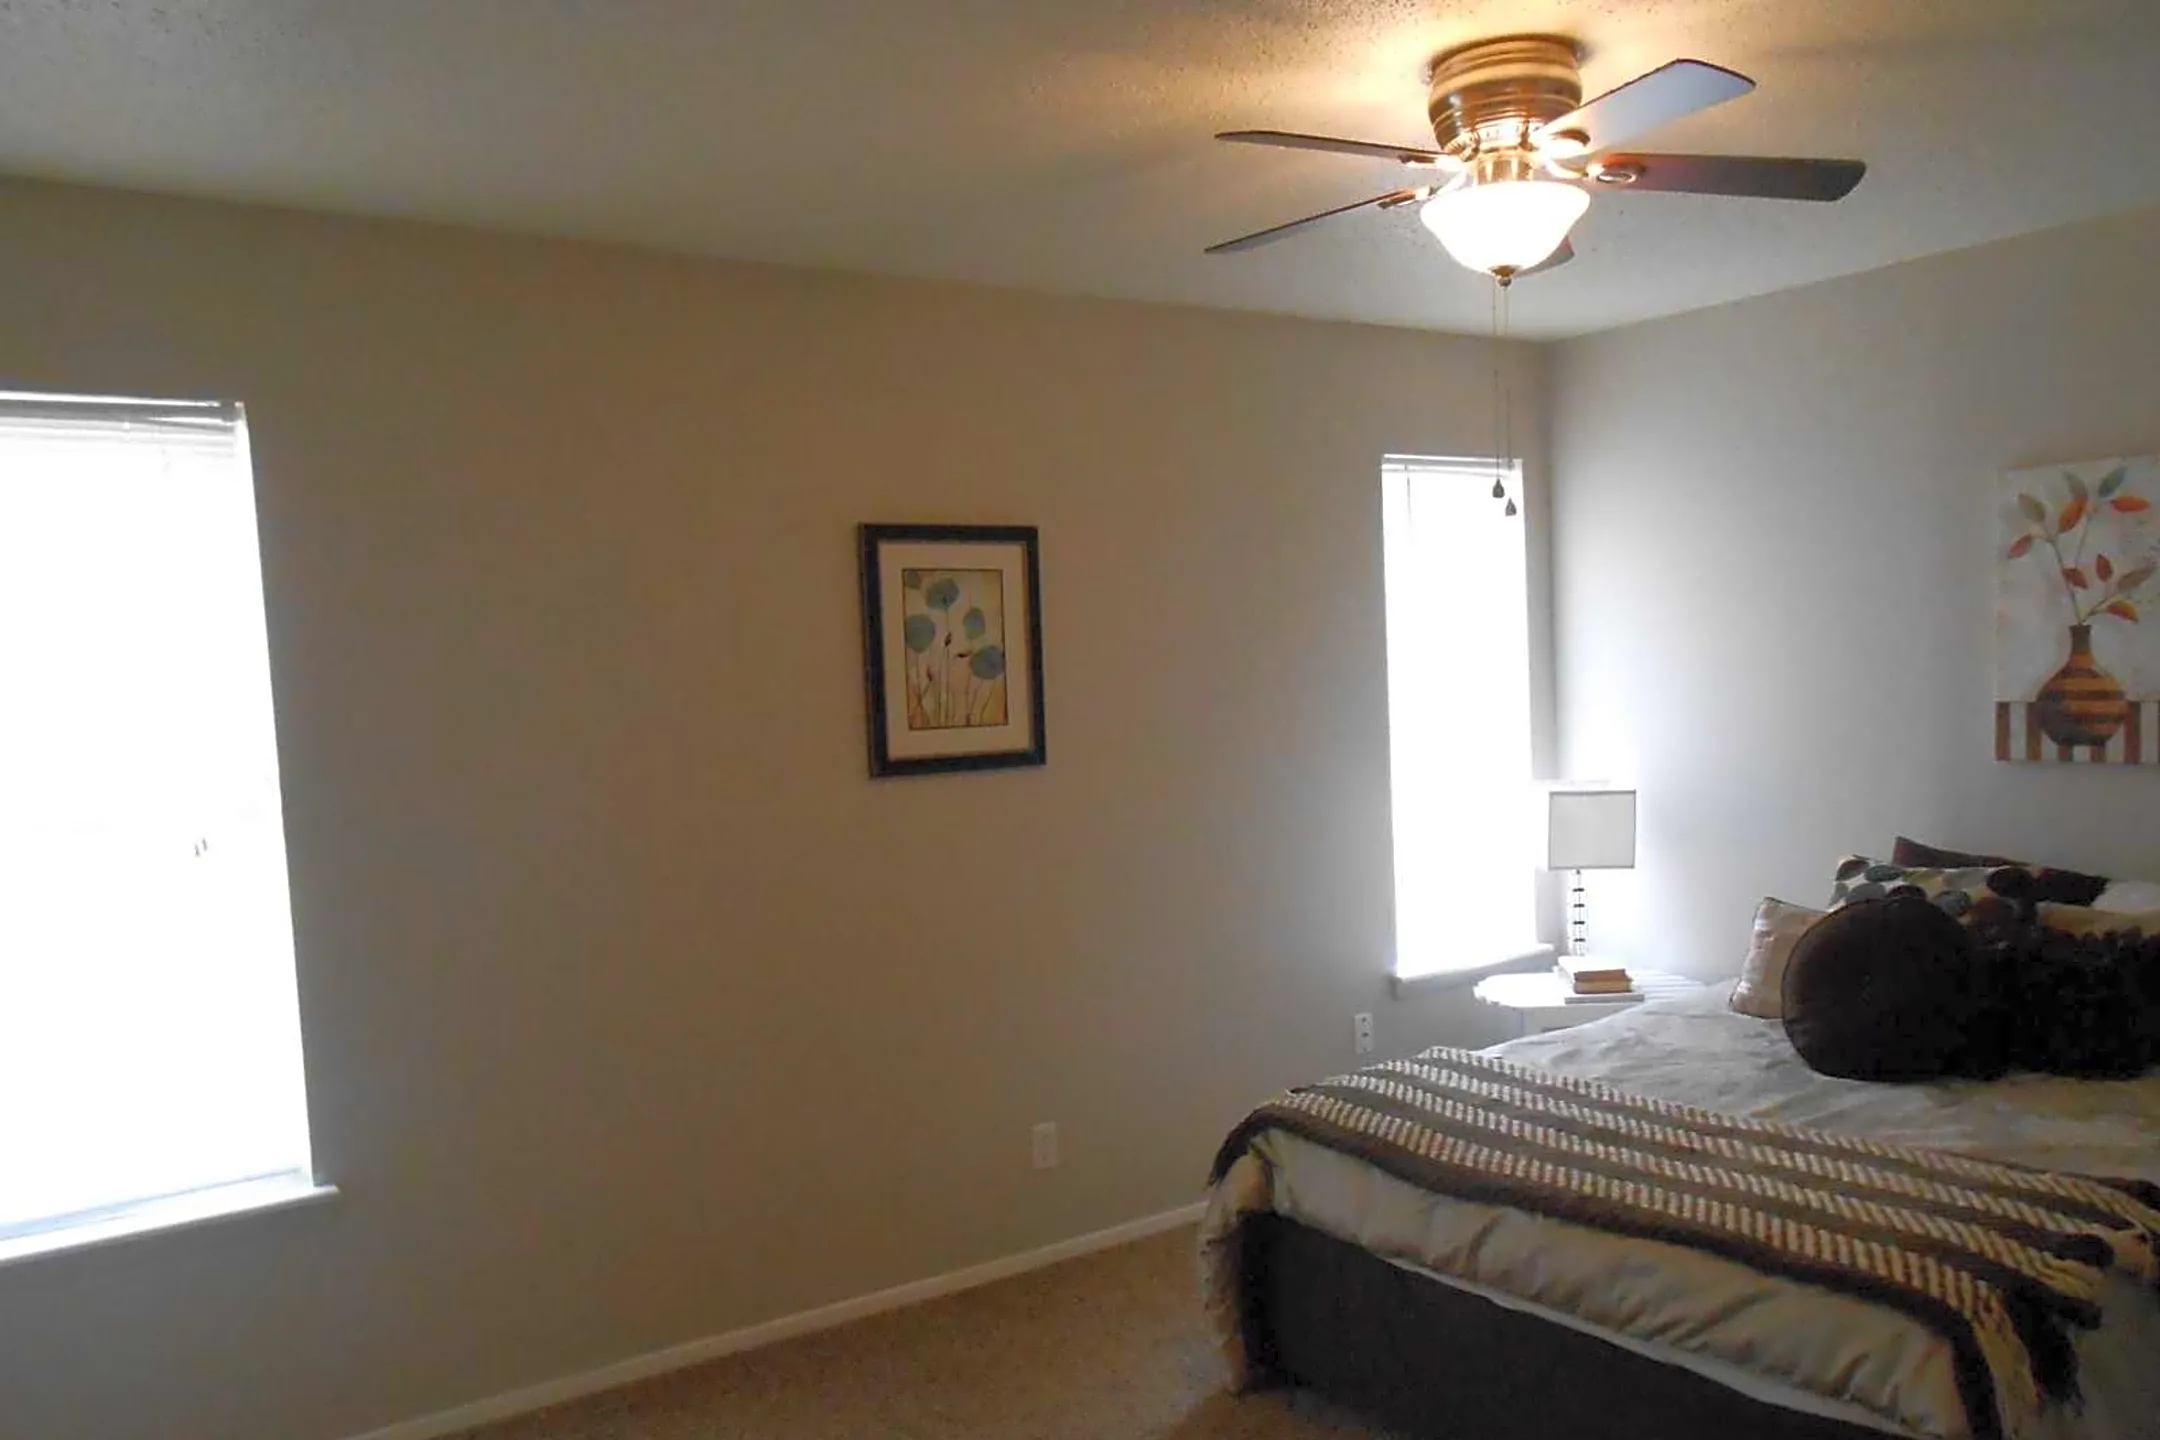 Bedroom - Sheppard's Edge Apartments - Wichita Falls, TX